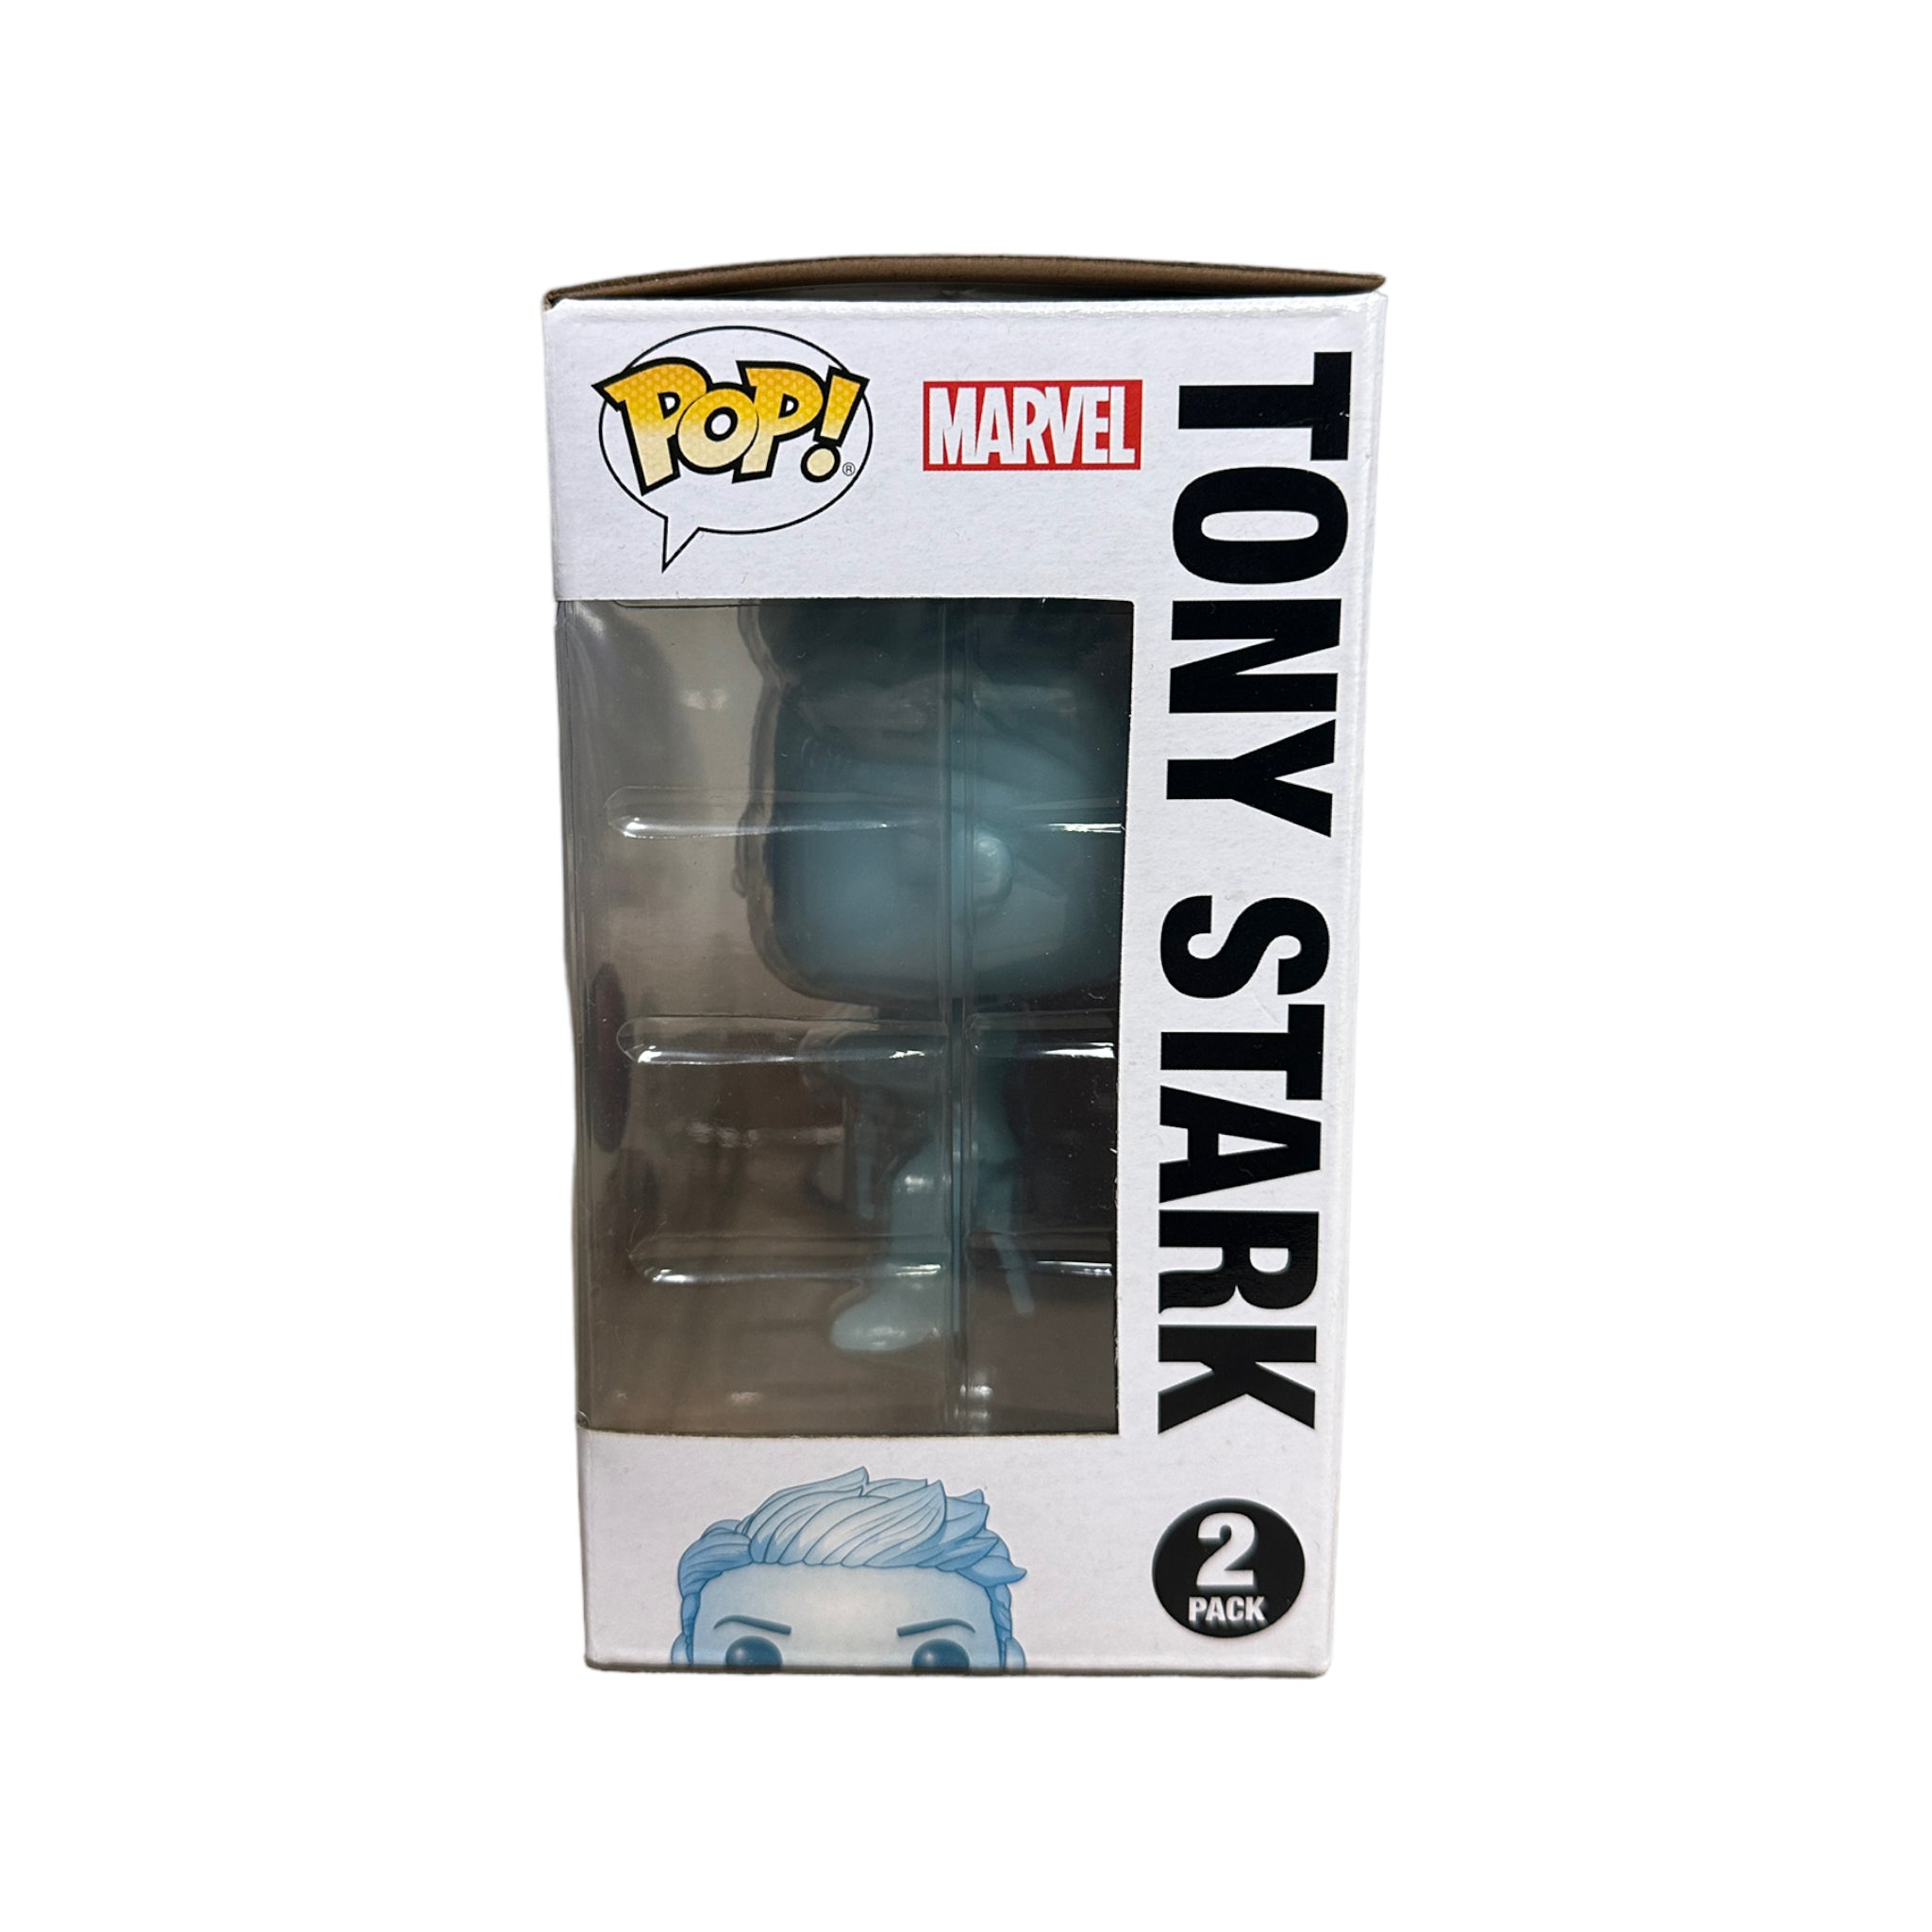 Morgan Stark & Tony Stark 2 Pack Funko Pop! - Avengers: Endgame - Pop In A Box Exclusive - Condition 8.75/10